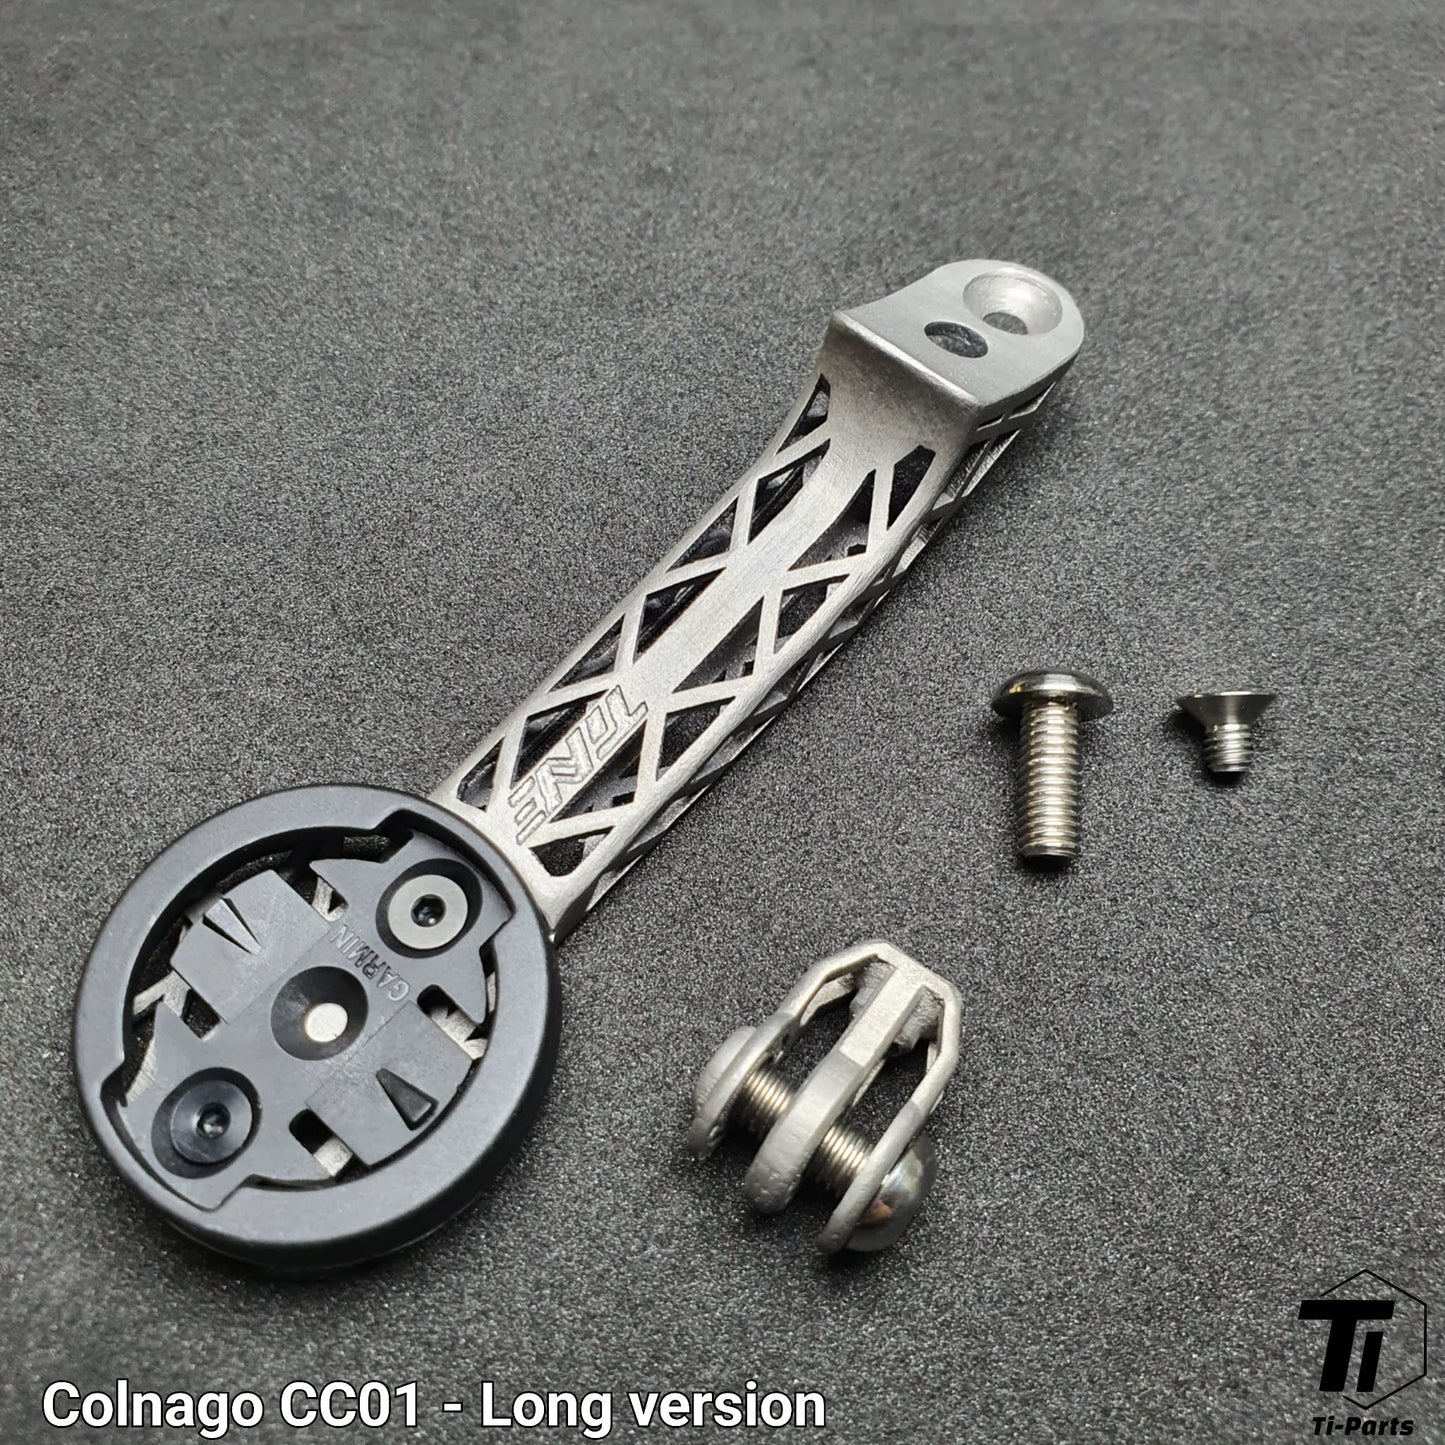 Colnago CC01 Titanium 3D Print Computer Mount | GoPro Light Bracket for Garmin Wahoo Super Lightweight